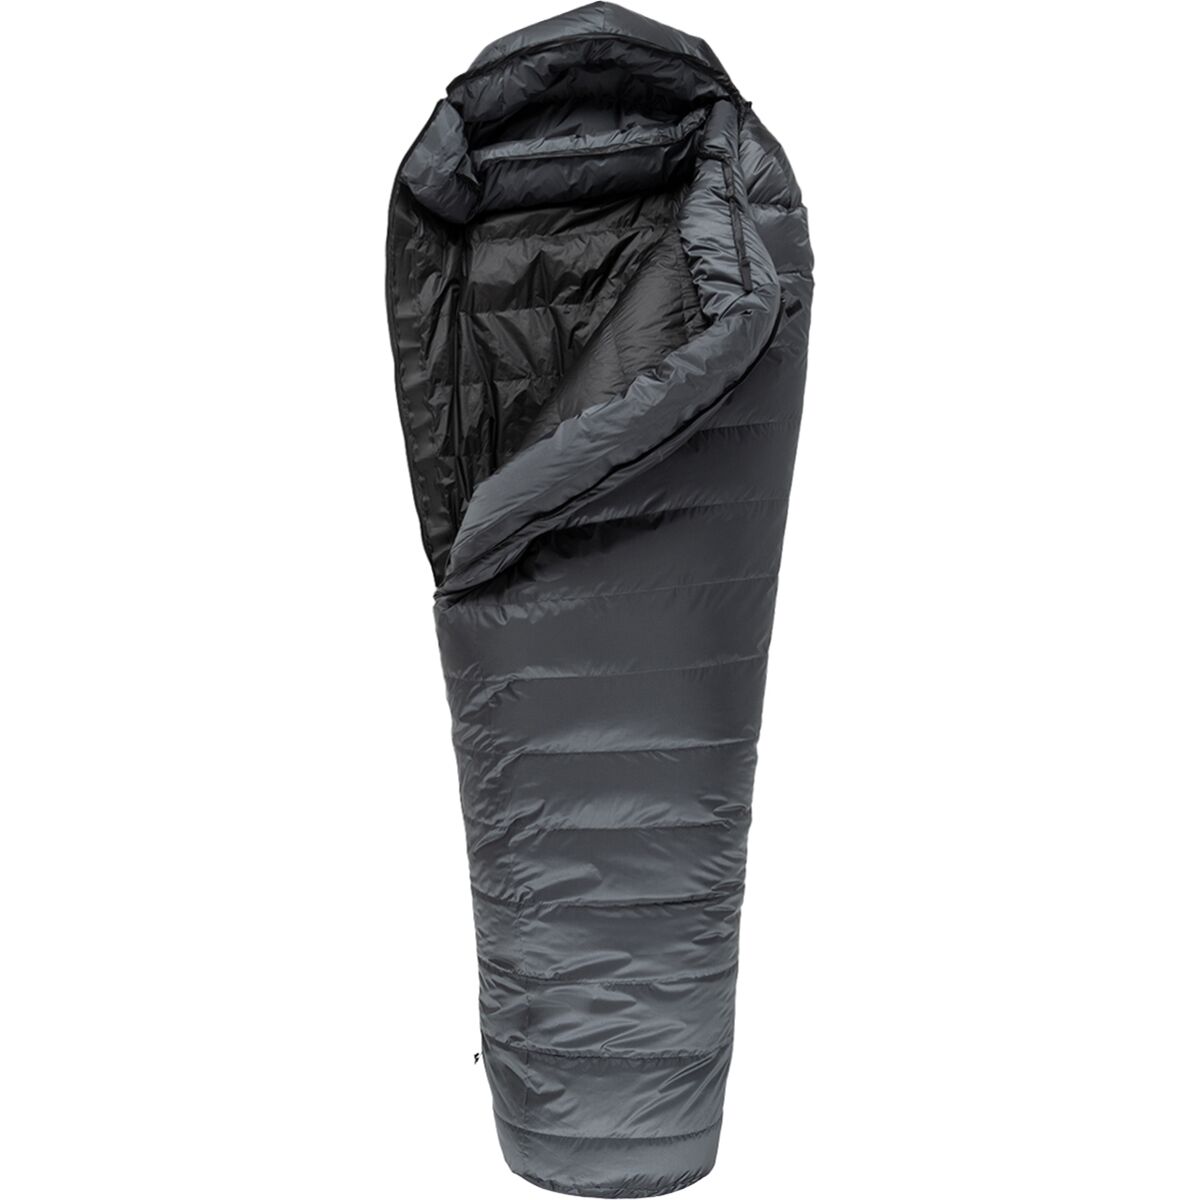 Western Mountaineering Kodiak GORE-TEX INFINIUM Sleeping Bag: 0F Down